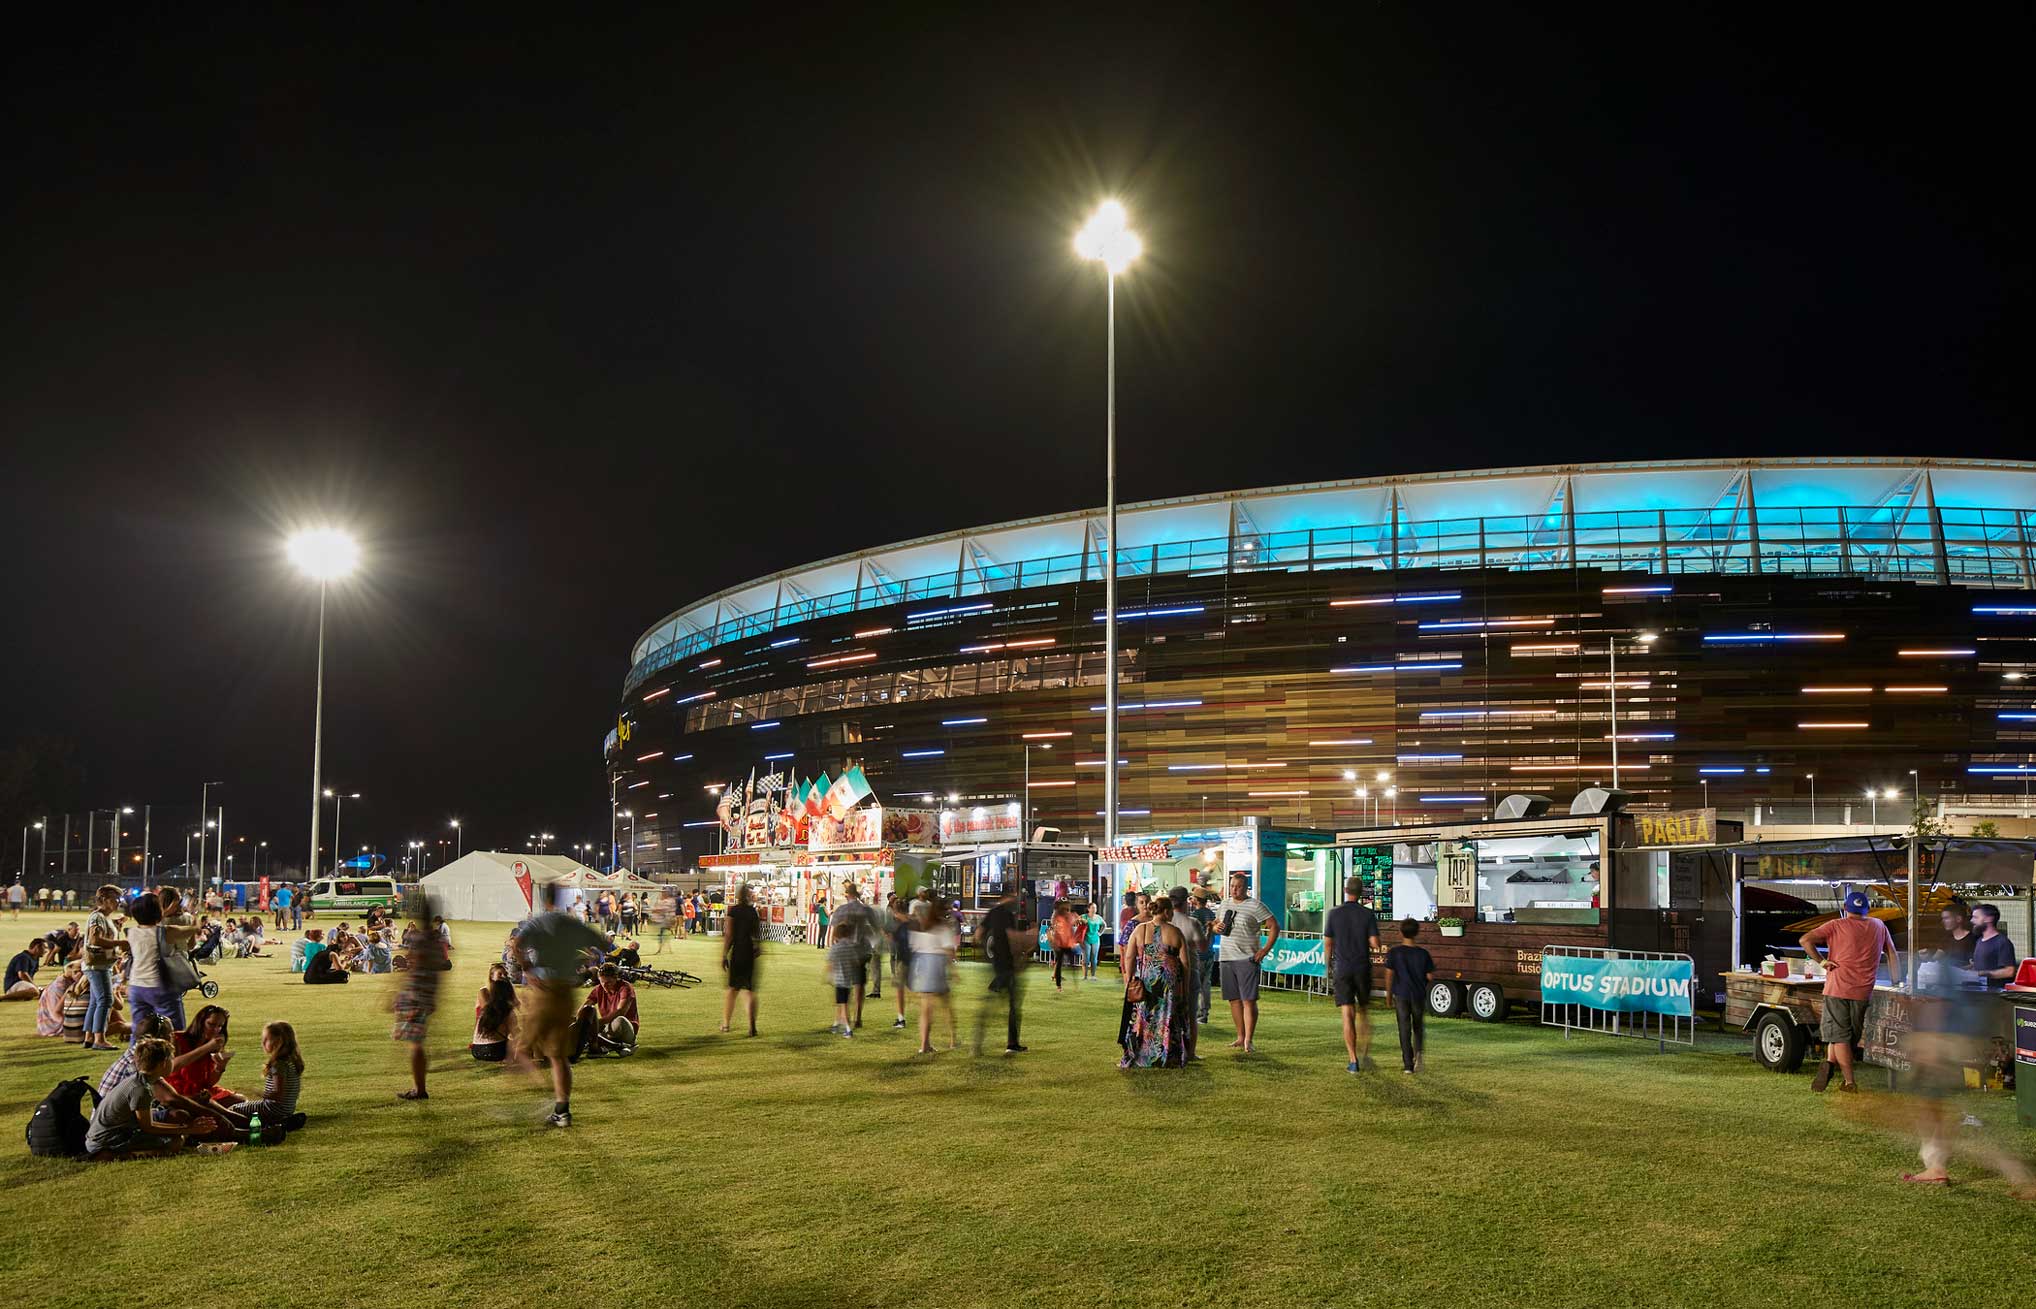 Optus Stadium, Perth, Australia, In association with Cox Architecture and Hassell Studio